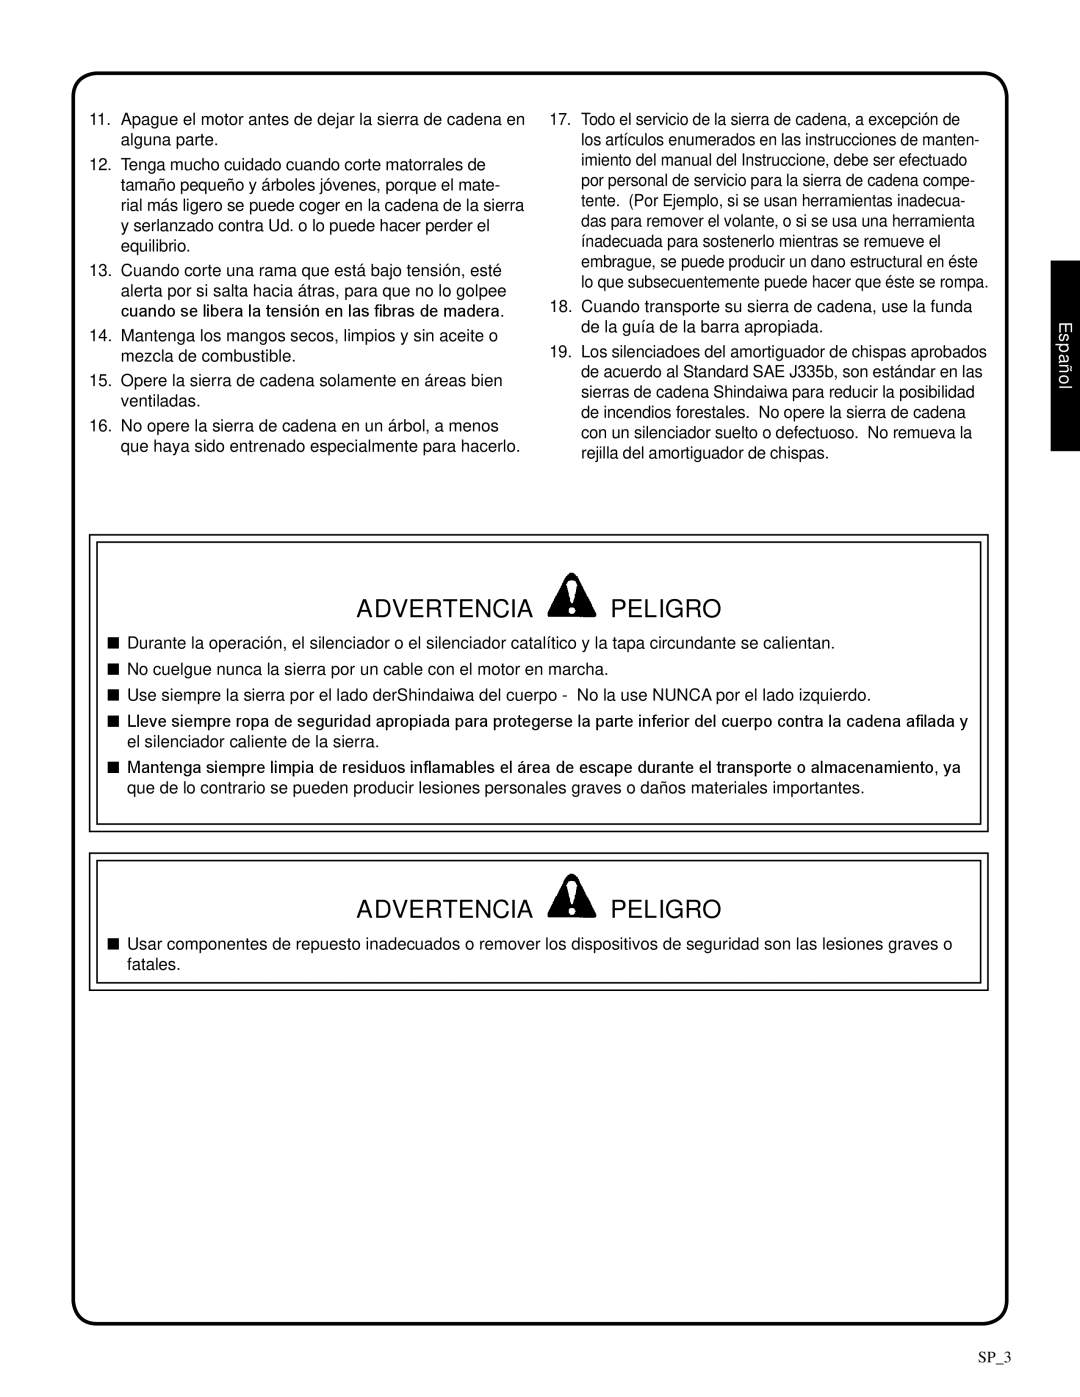 Shindaiwa 326T, 82085 manual Advertencia Peligro, Español, SP_3 